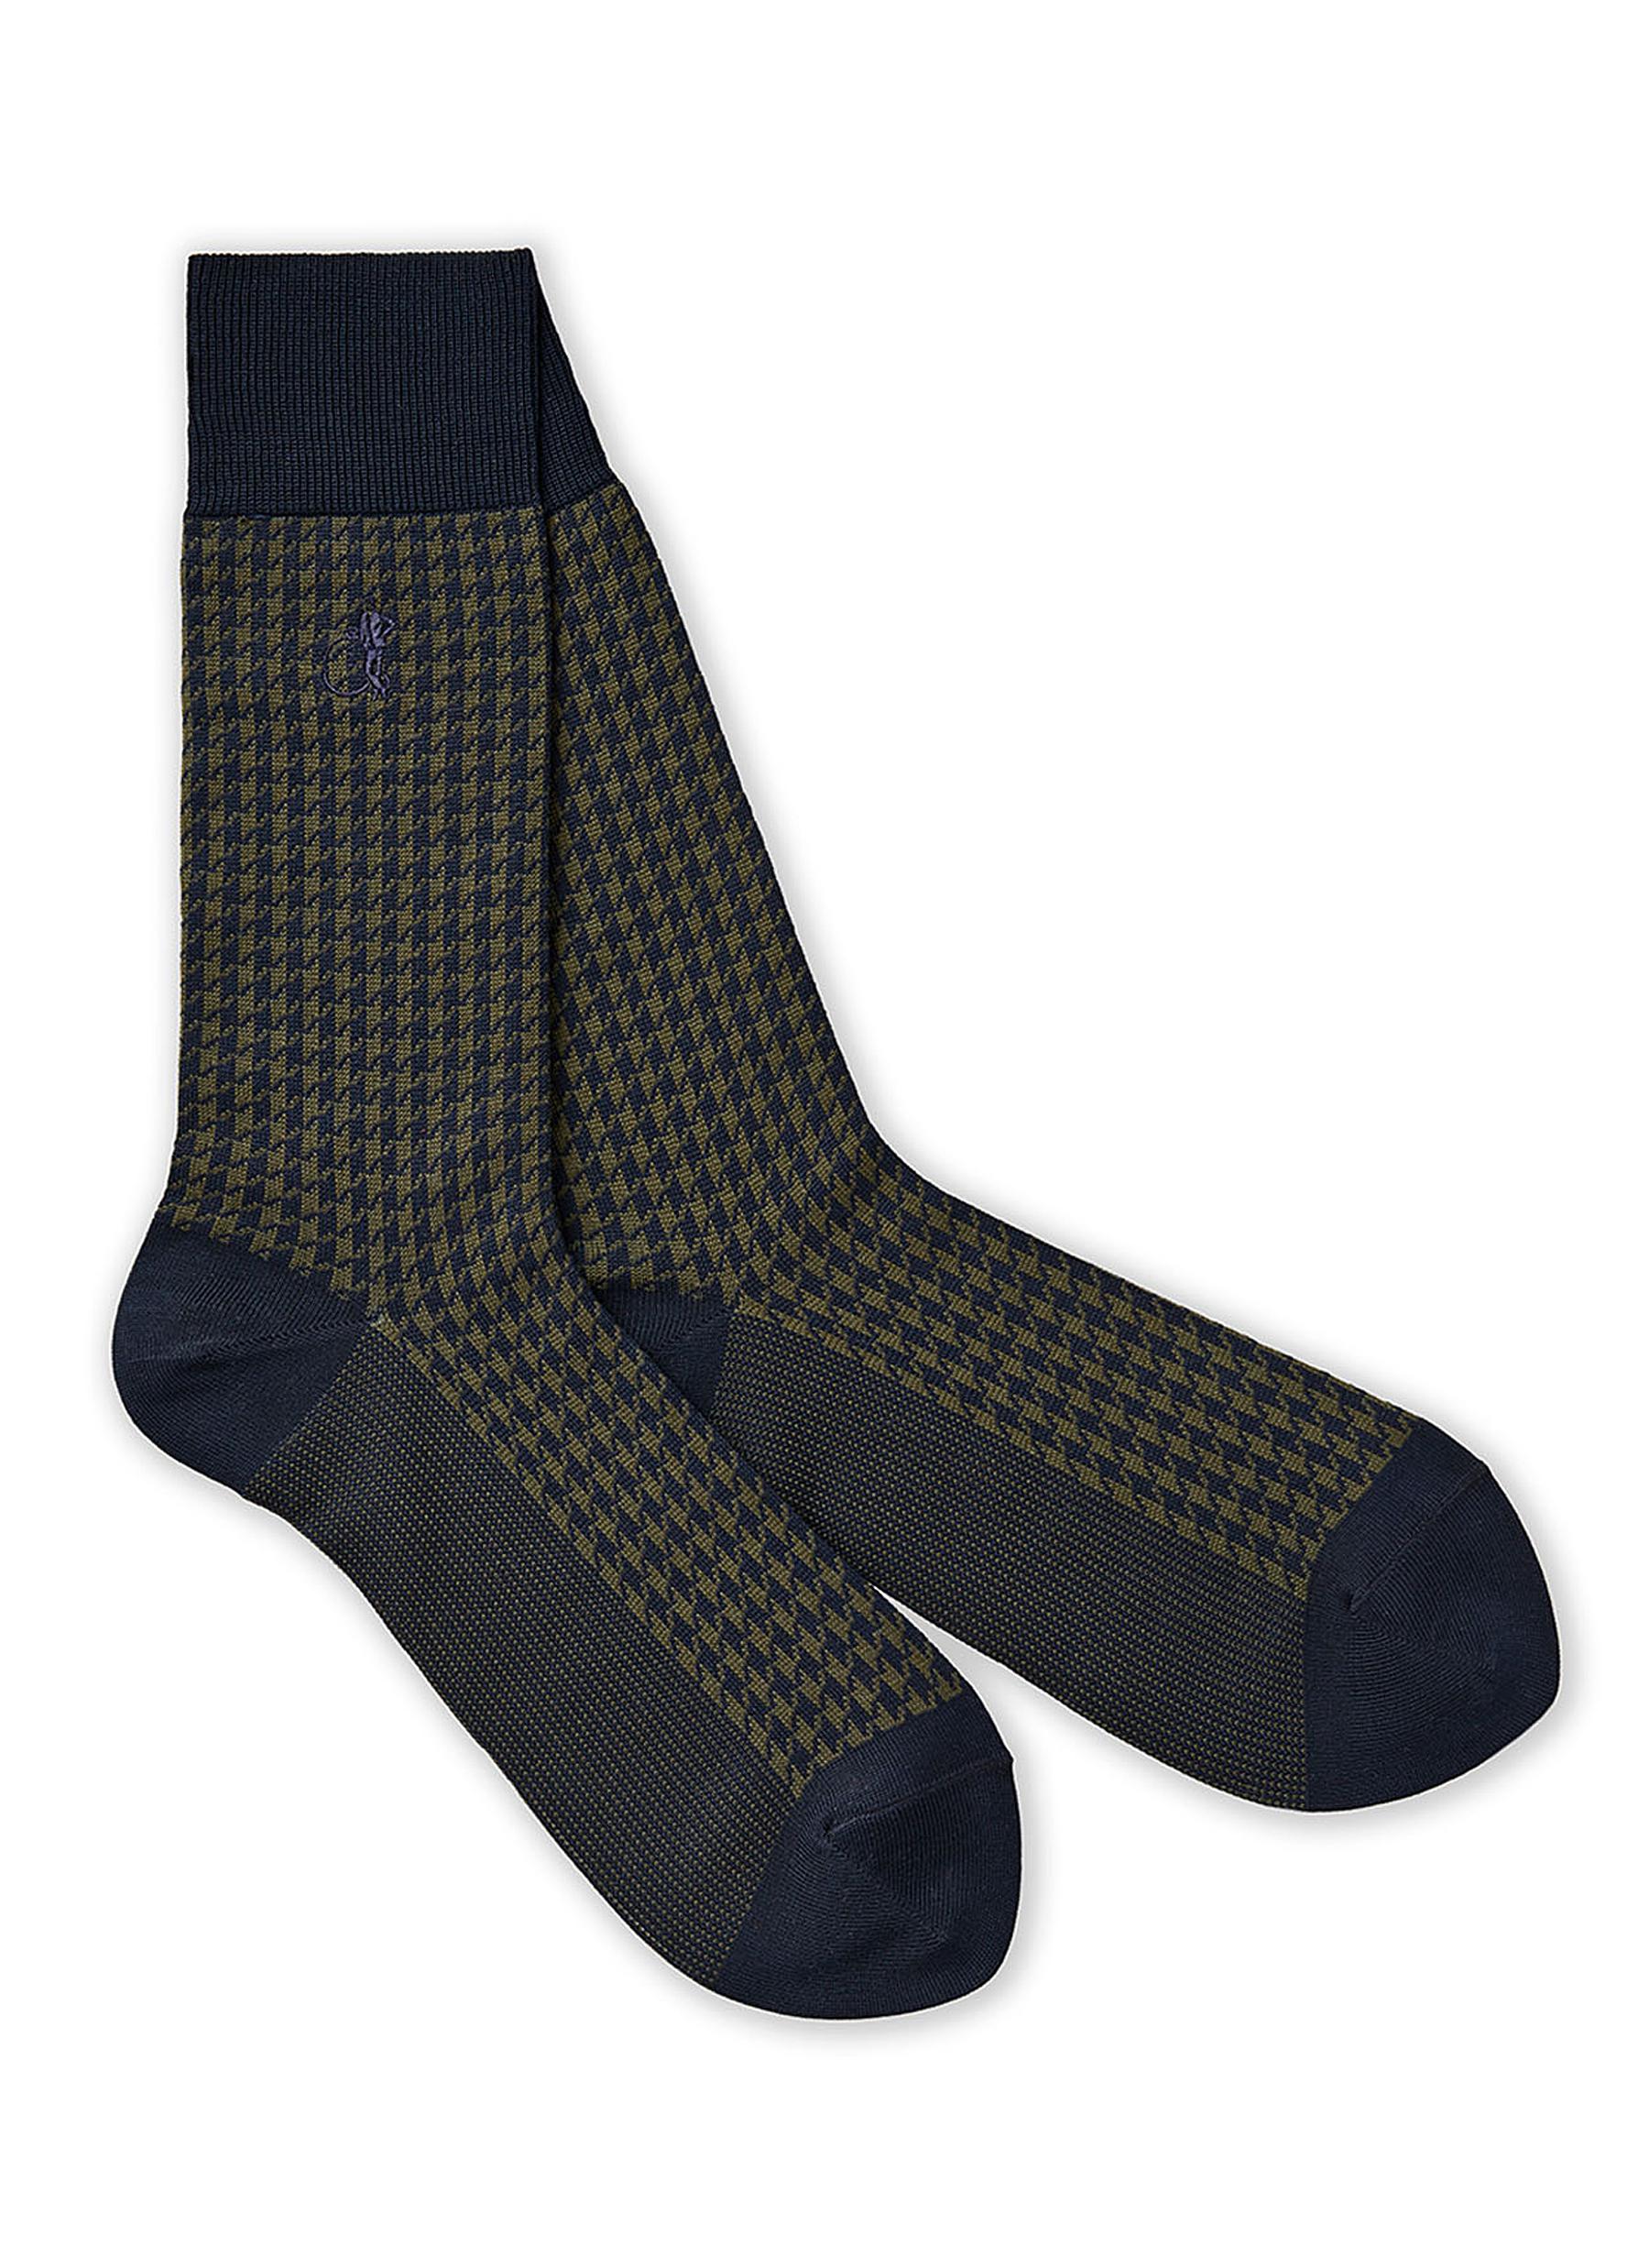 Jermyn St. Houndstooth Mid-Calf Socks